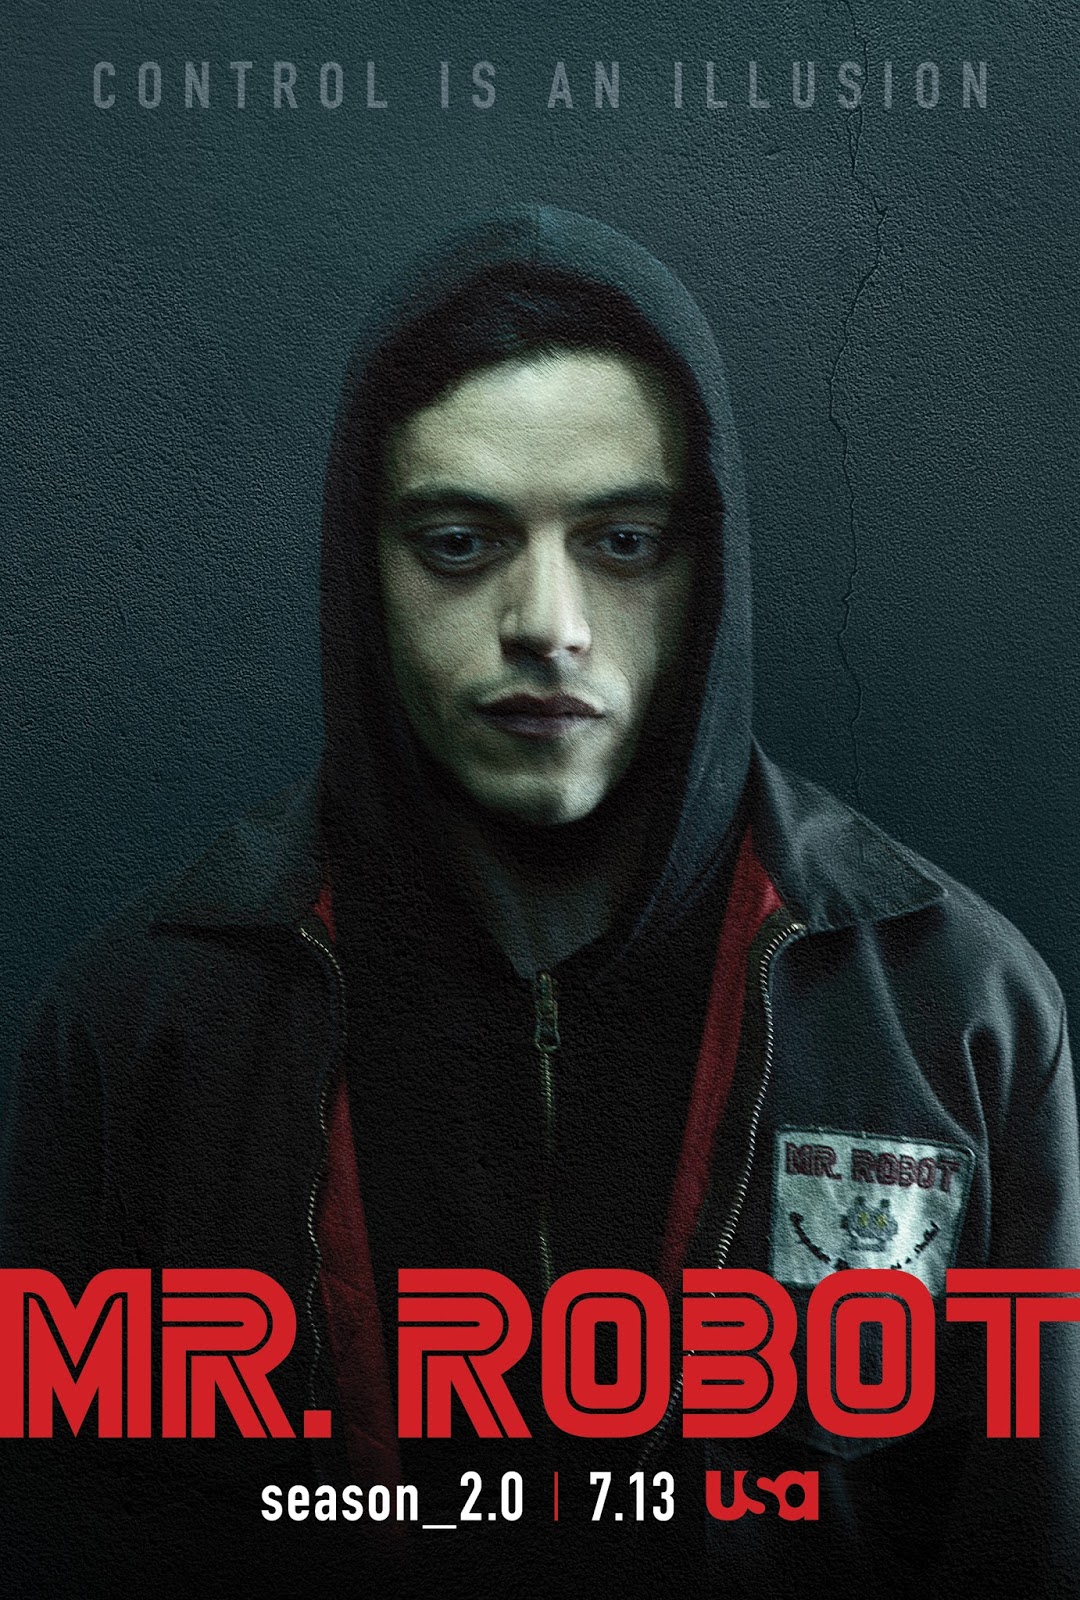 Mr. Robot 2016: Season 2